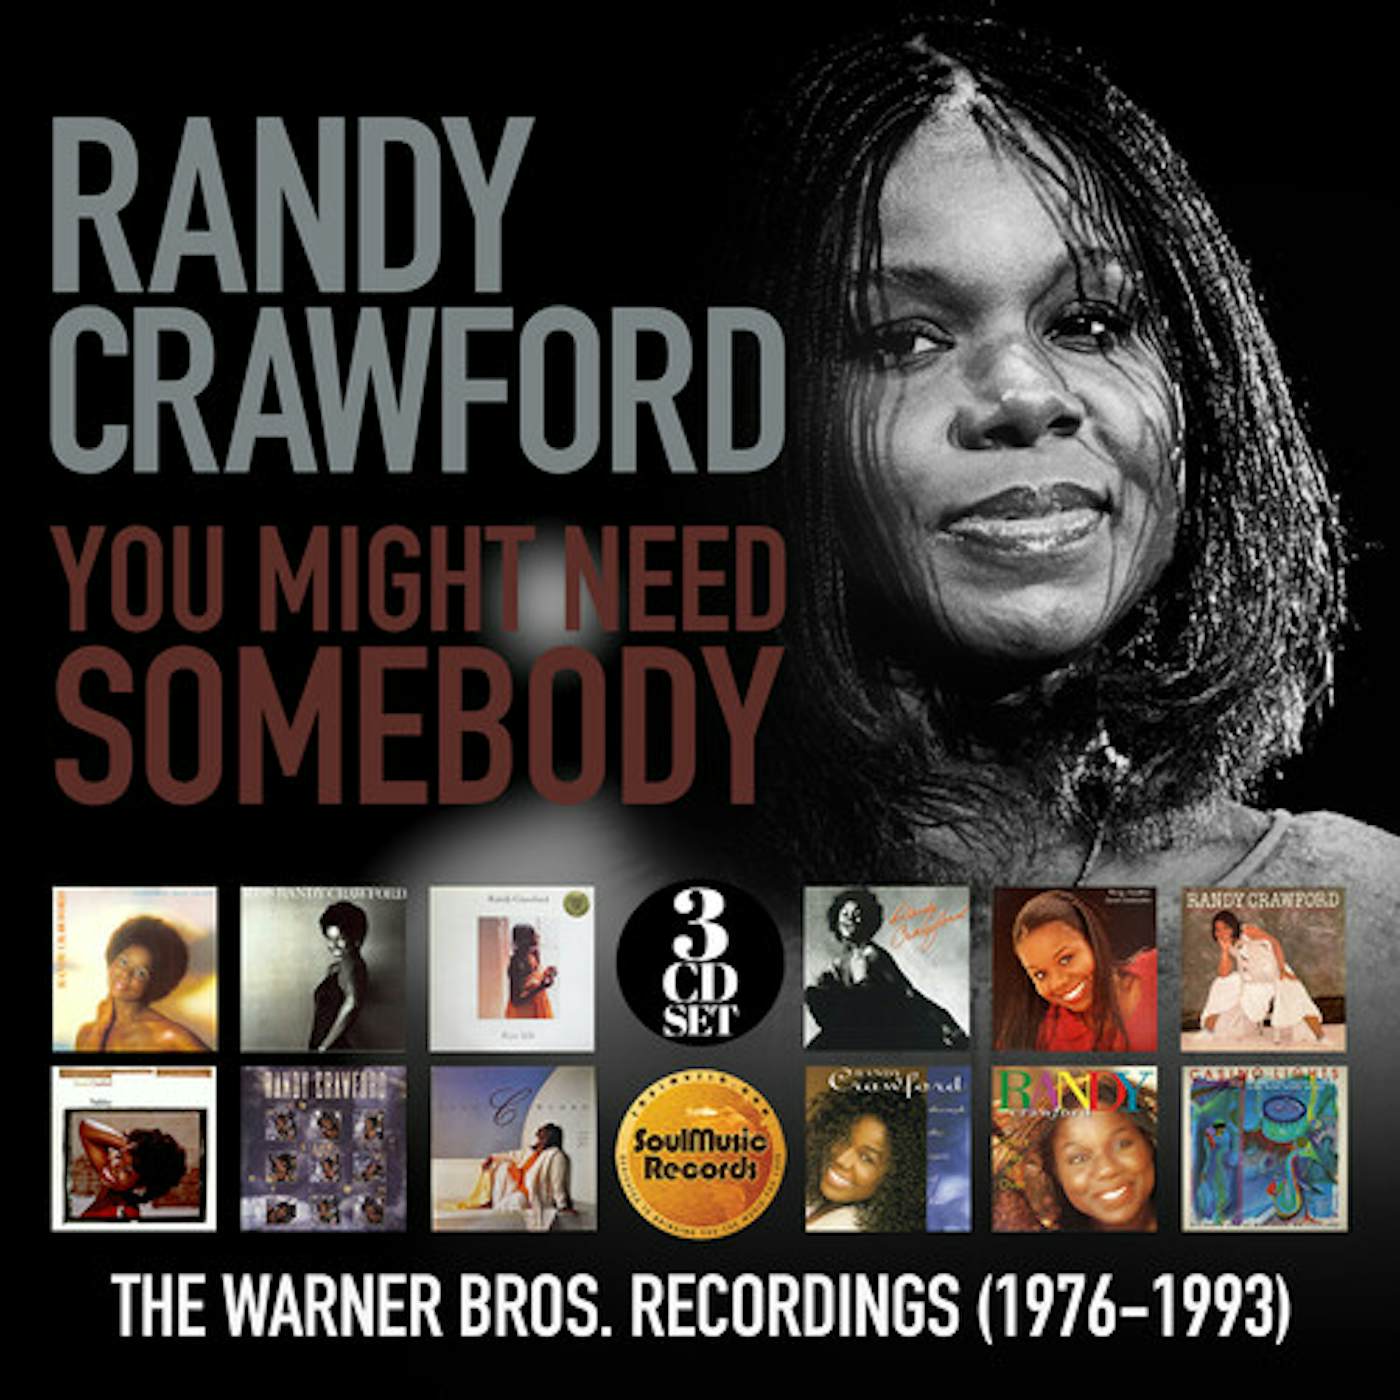 Randy Crawford YOU MIGHT NEED SOMEBODY: WARNER BROS RECORDINGS CD